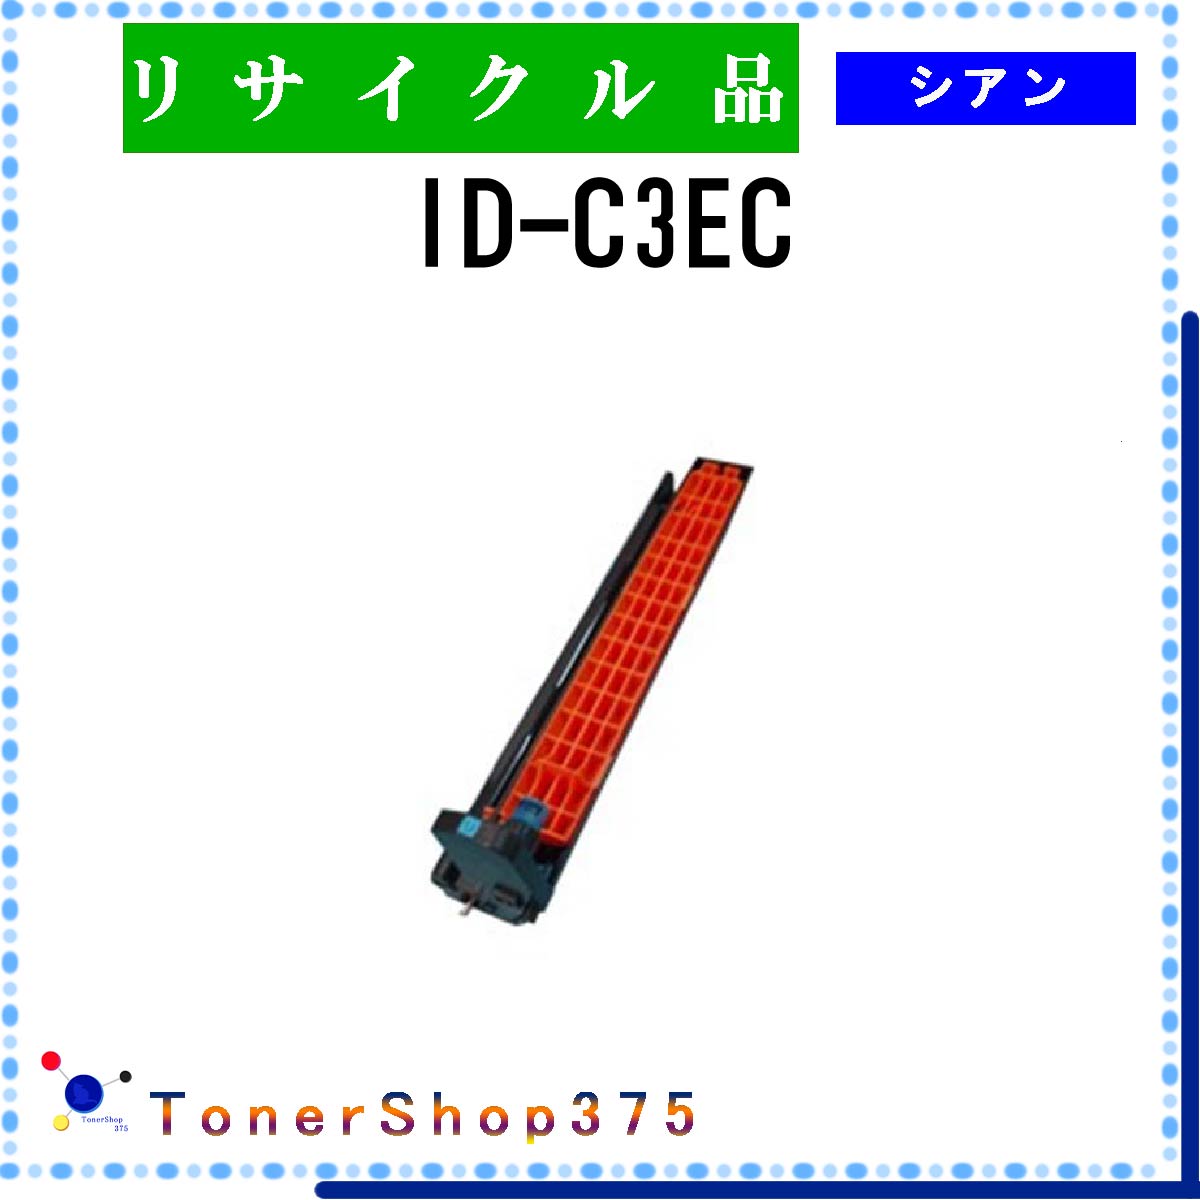 OKI y ID-C3EC z VA TCN h TCNHƉF/ISO擾H蒼 STMCF E&Q ݌ɕi 